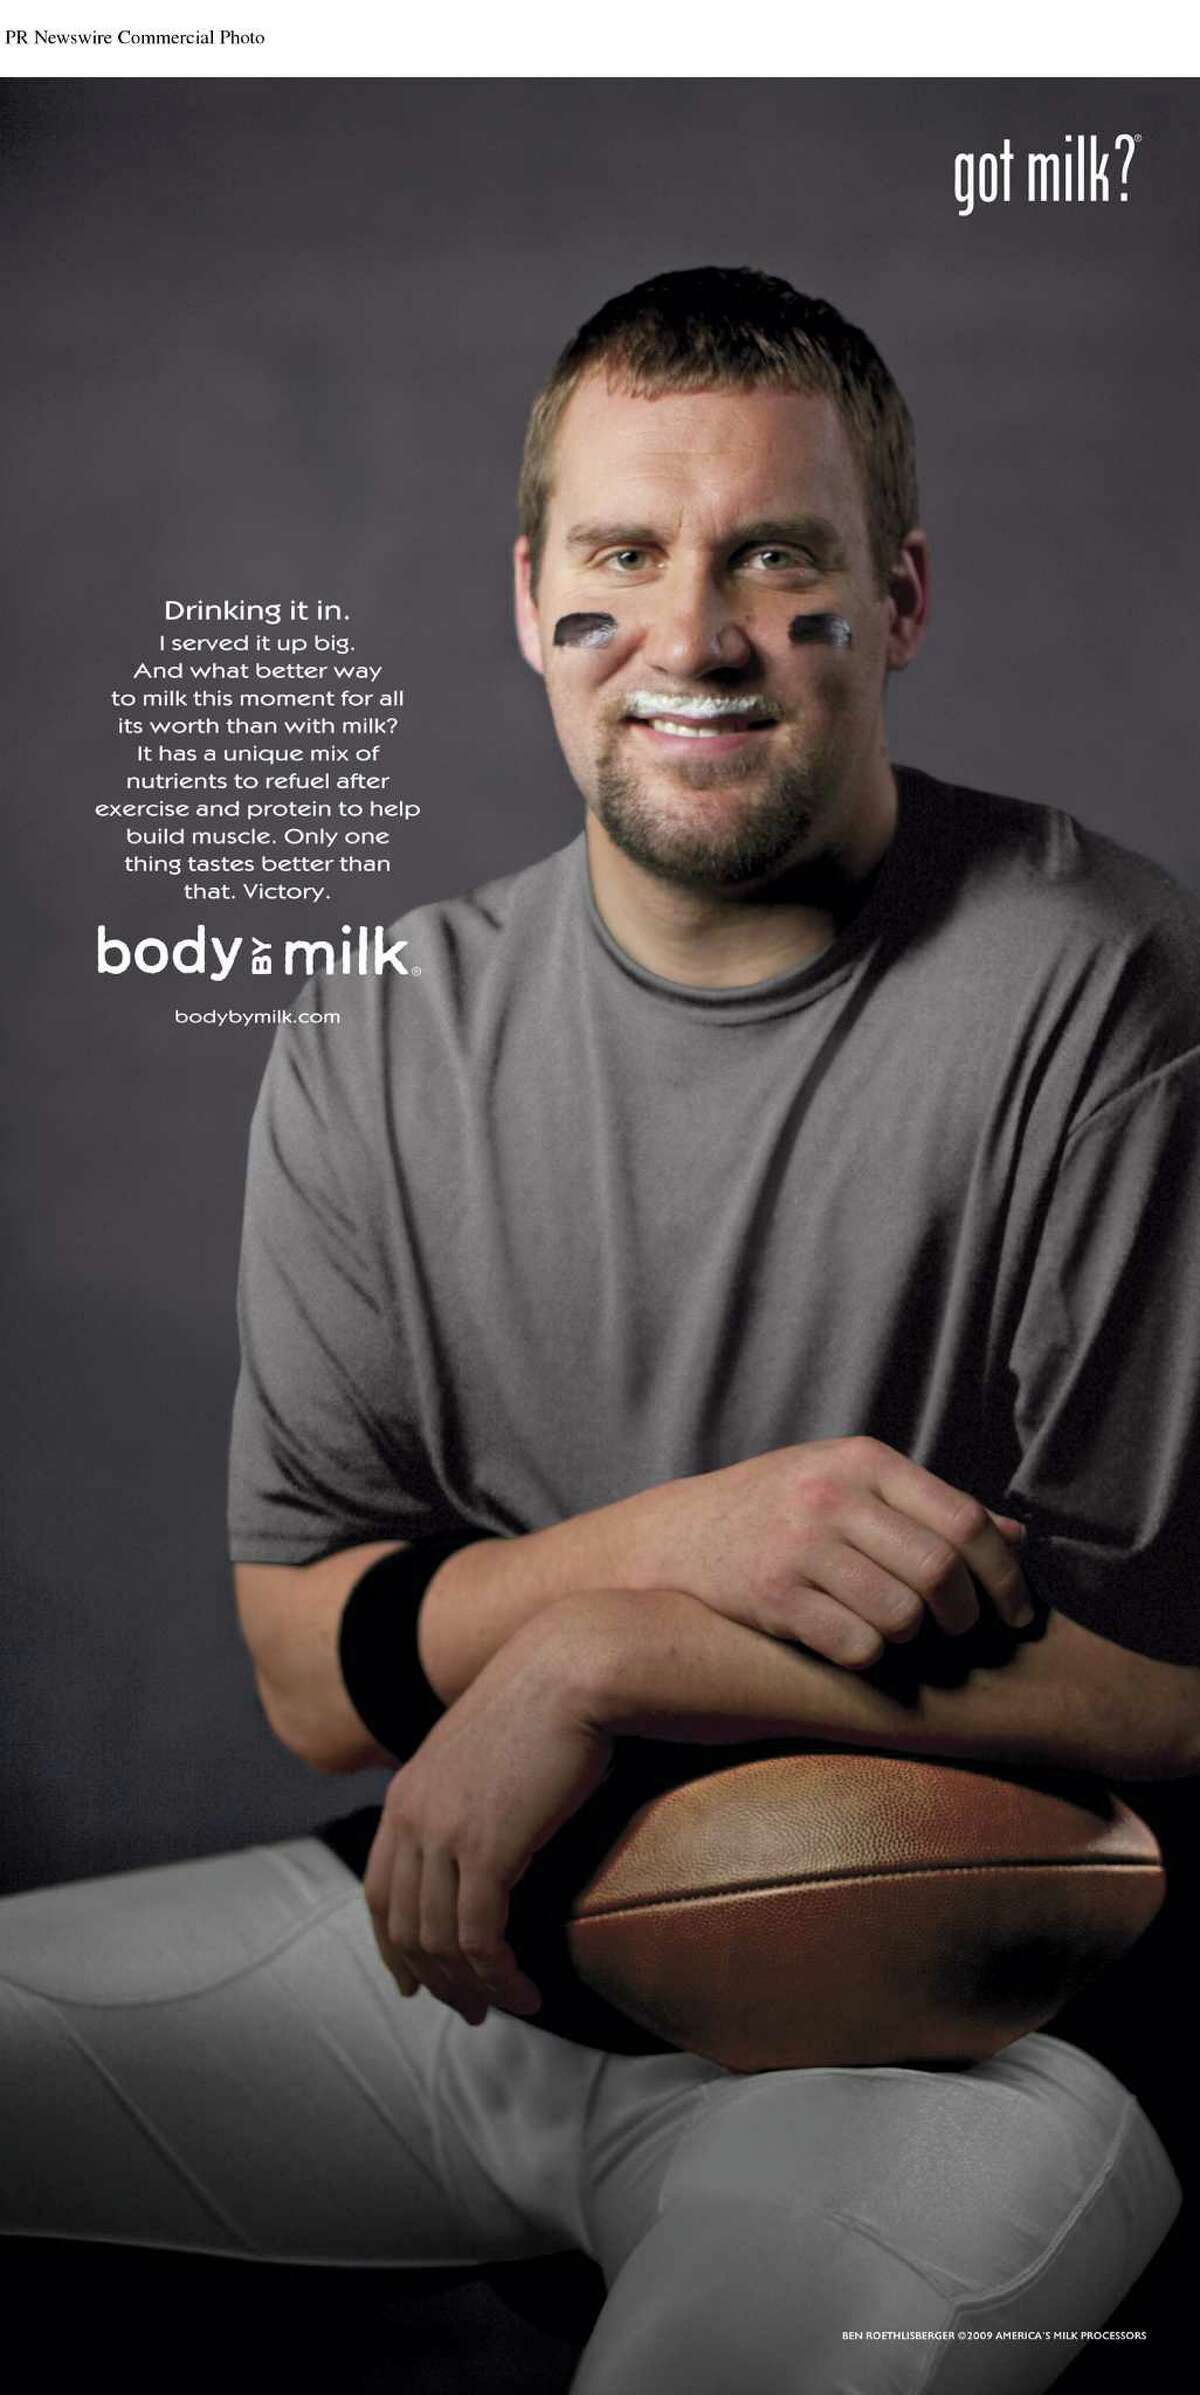 Got Milk? campaign posters